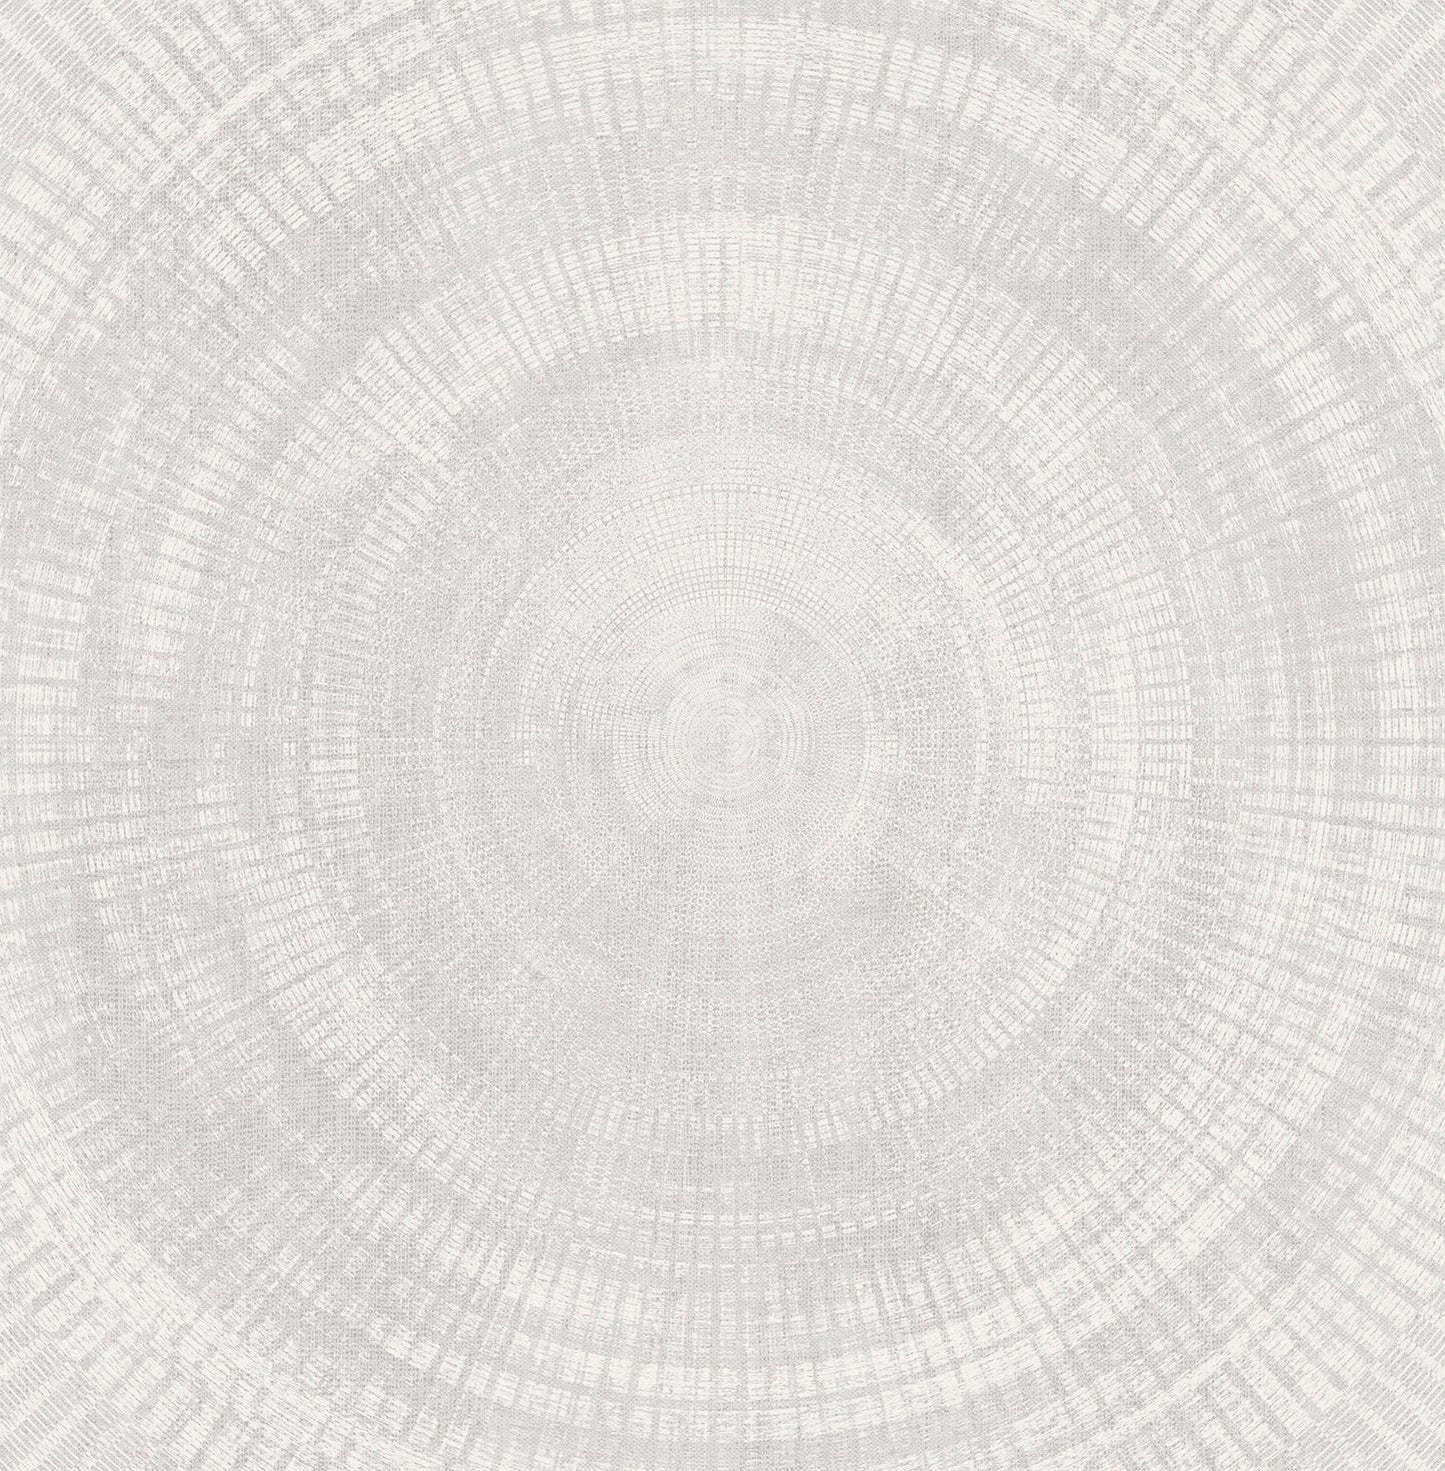 View 2949-61106 Imprint Lalit Off-White Medallion Off-White A-Street Prints Wallpaper